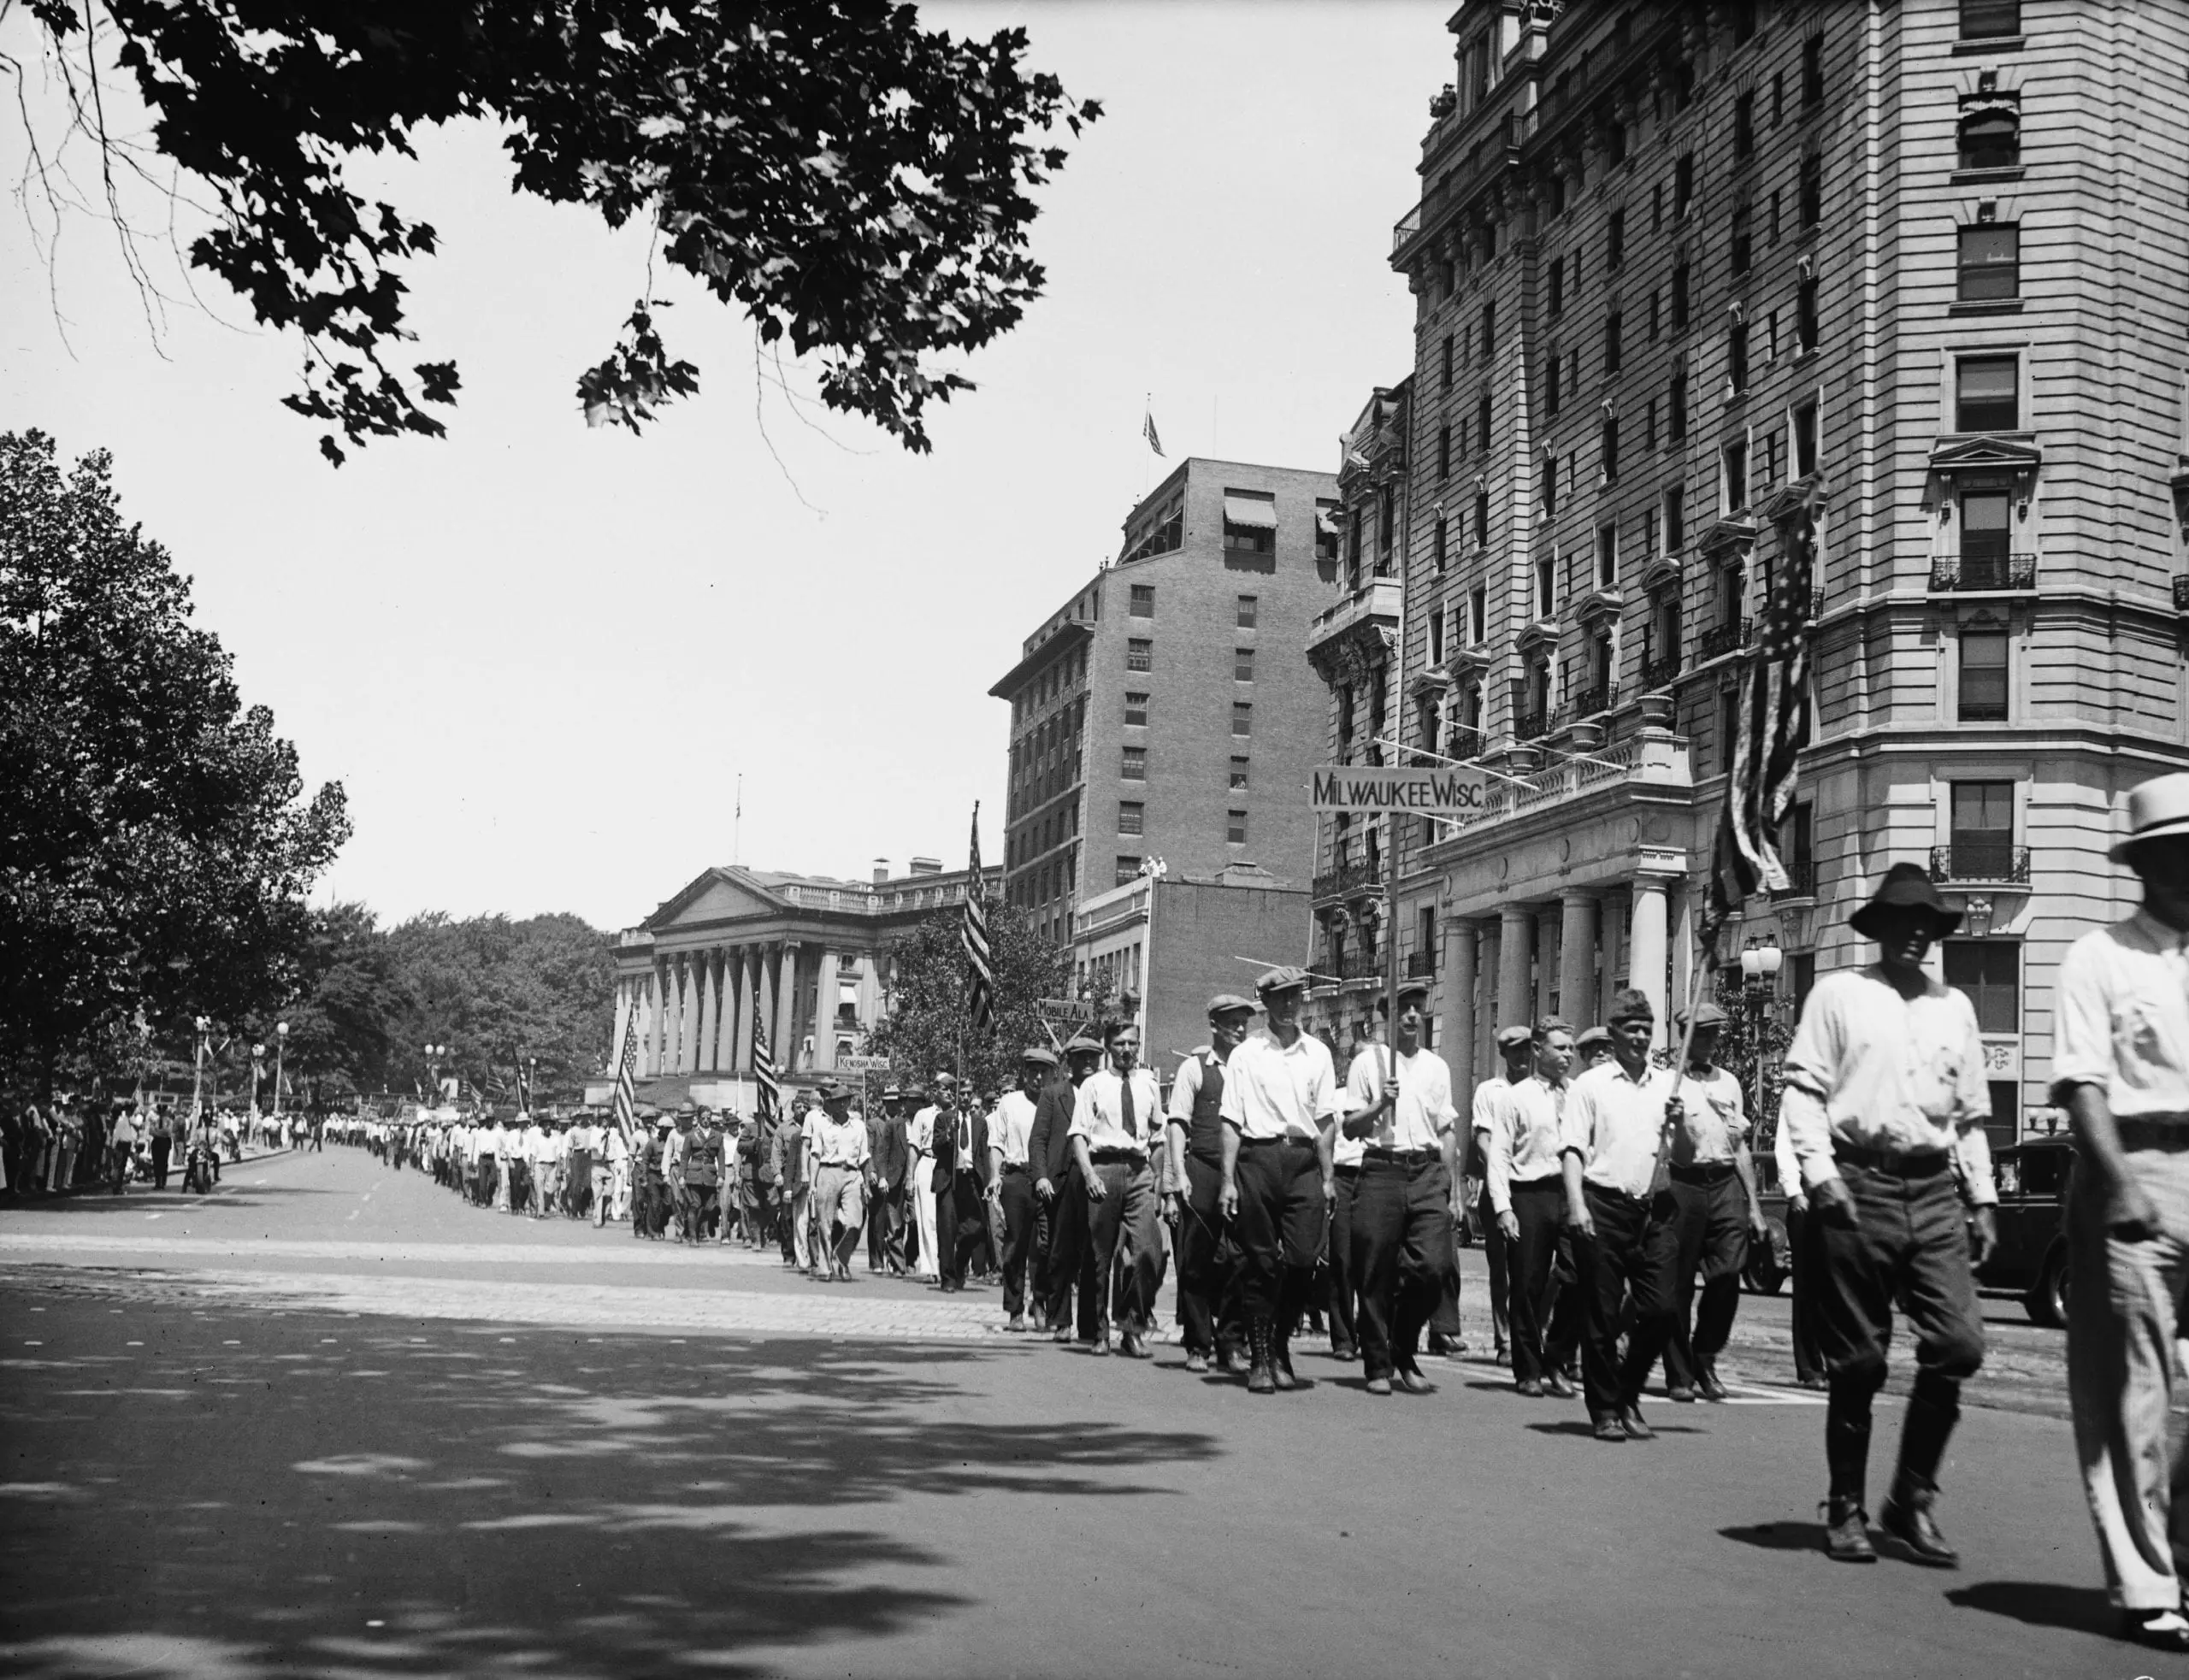 1932 parade in Washington, D.C.